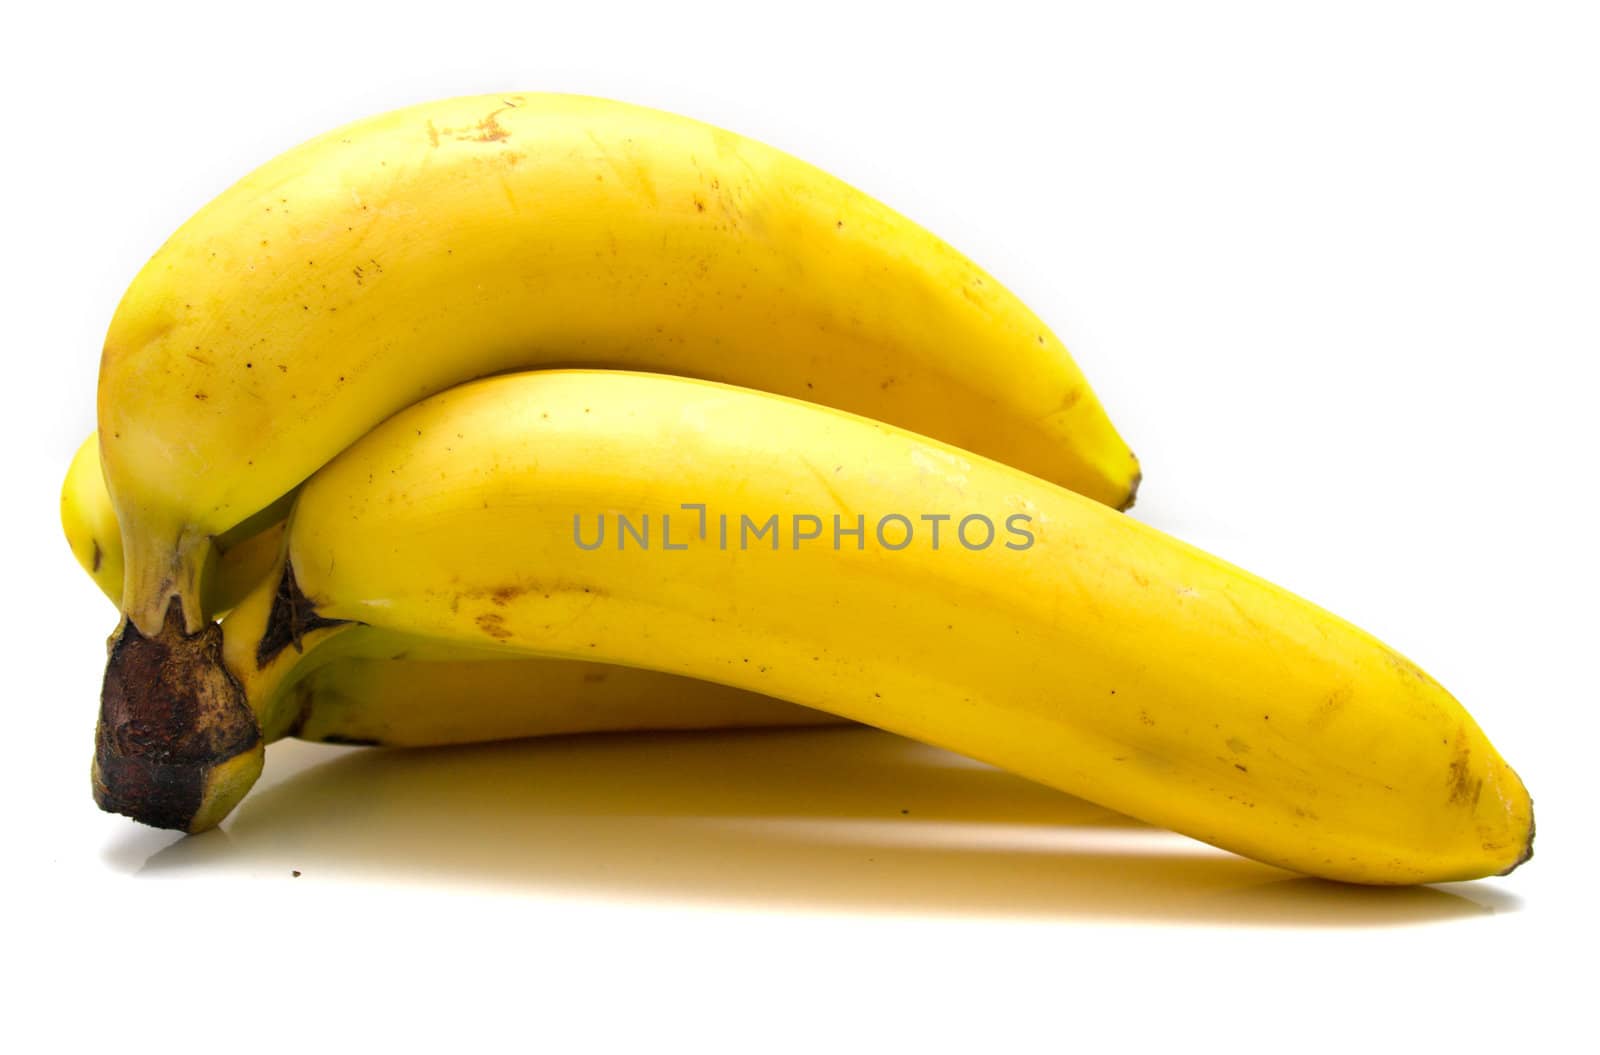 Ripe bananas on the white background. Shallow DOF